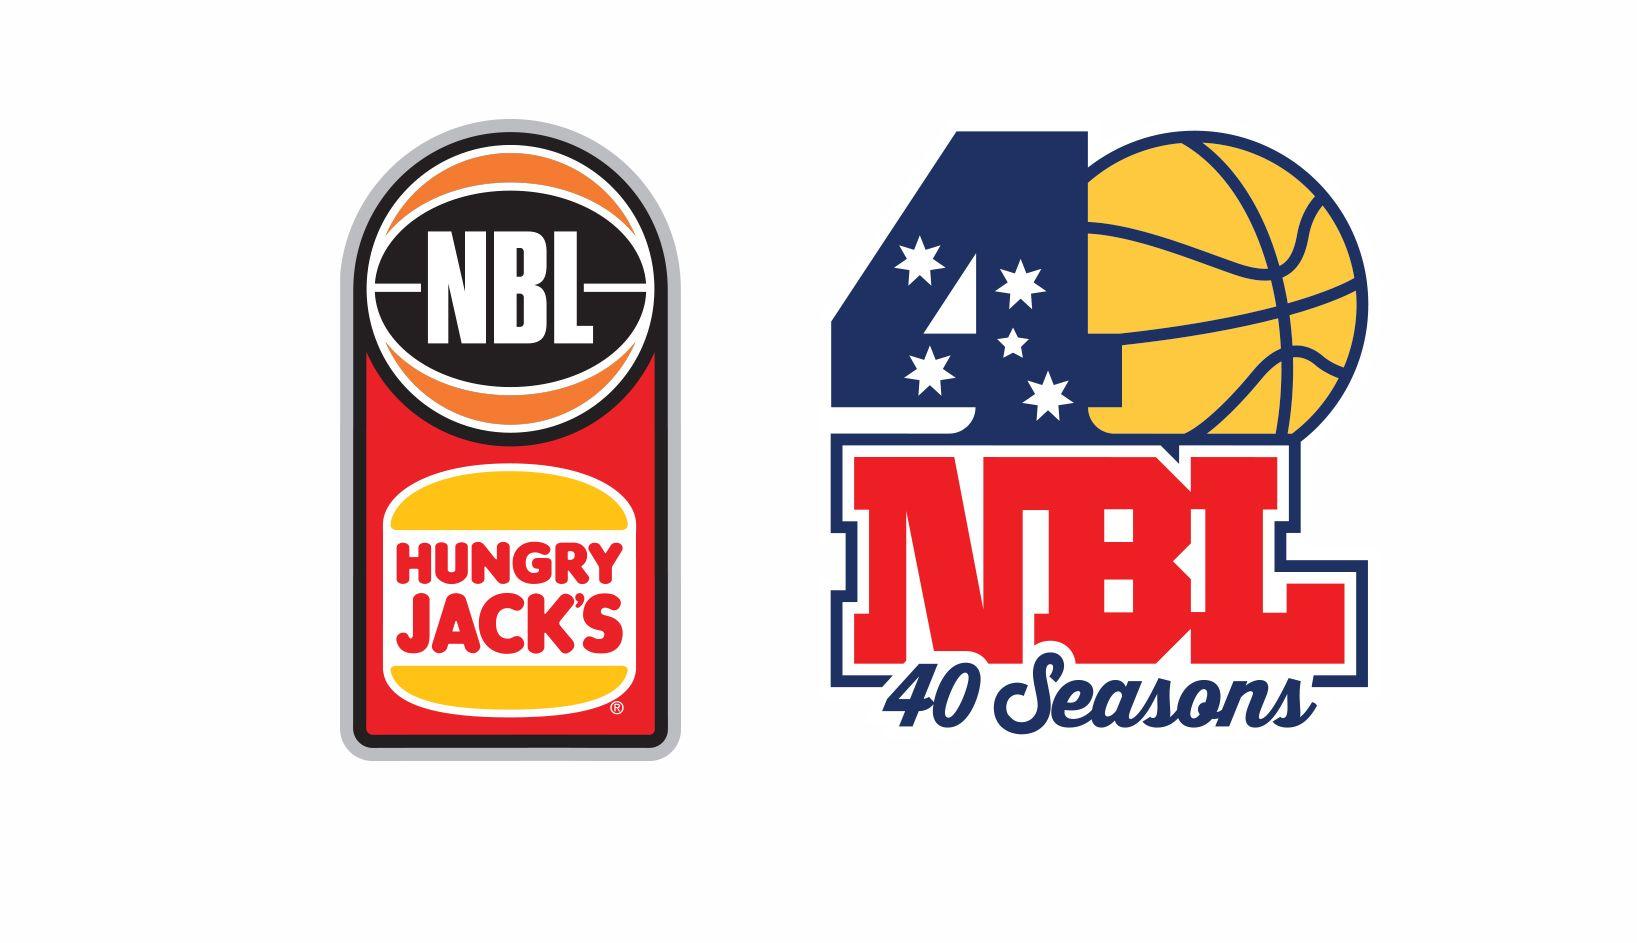 NBL Logo - National Basketball League | NBL